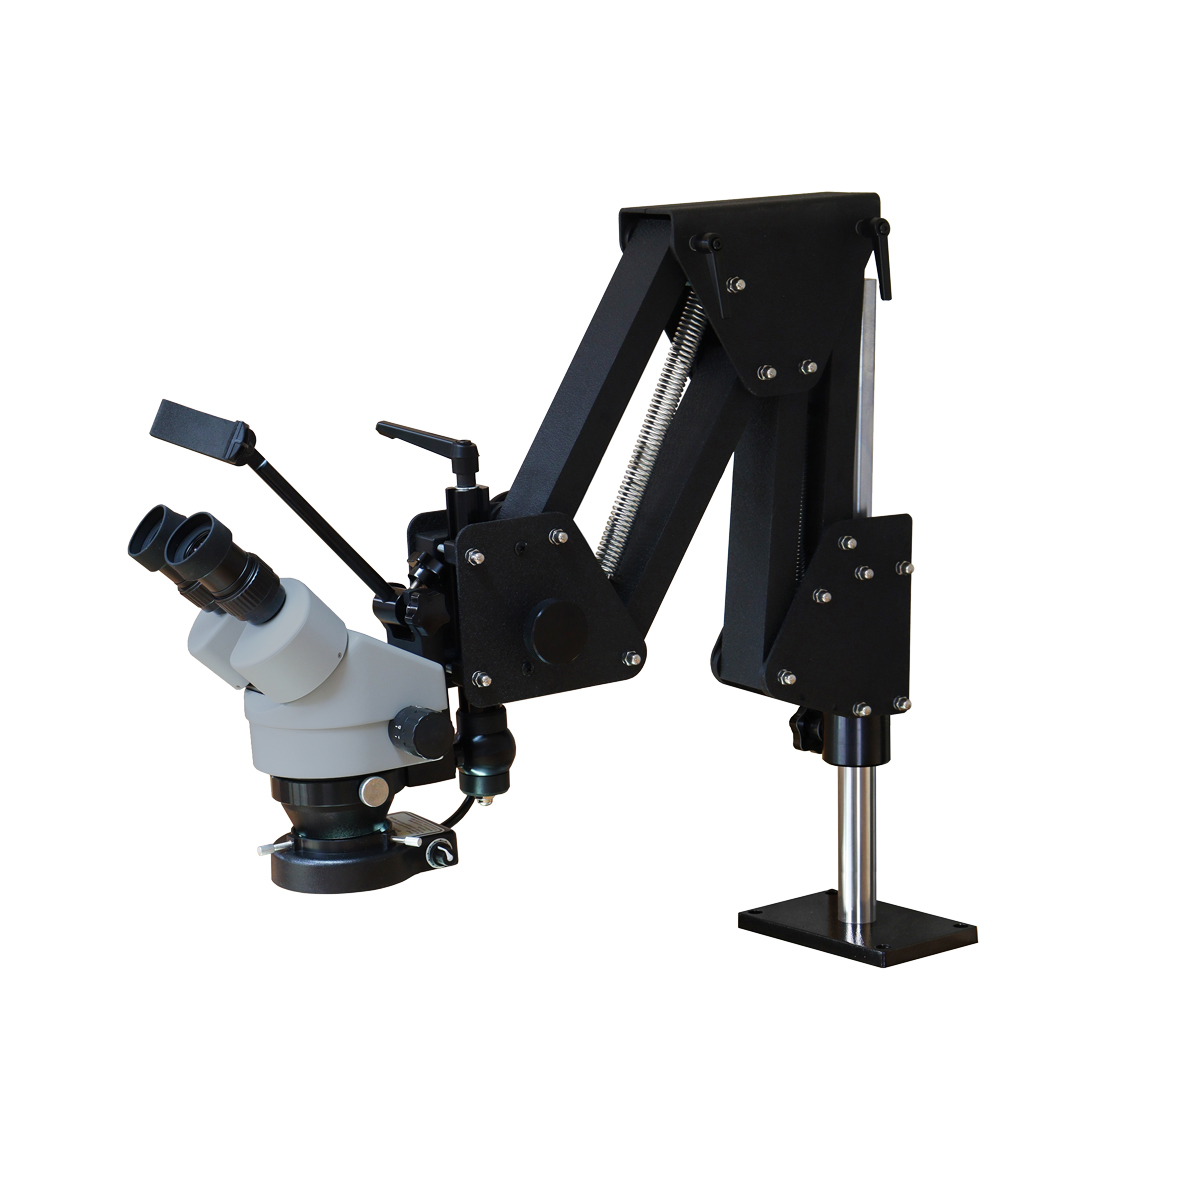 Durston S40 Microscope